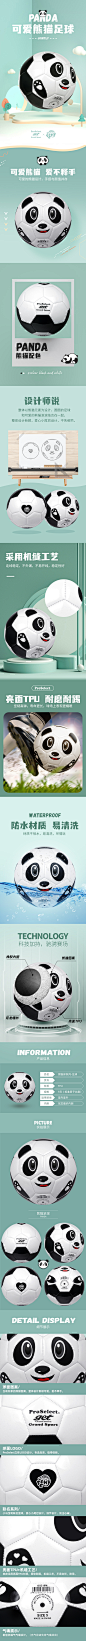 proselect专选 熊猫足球 详情页设计 天猫淘宝 平面设计